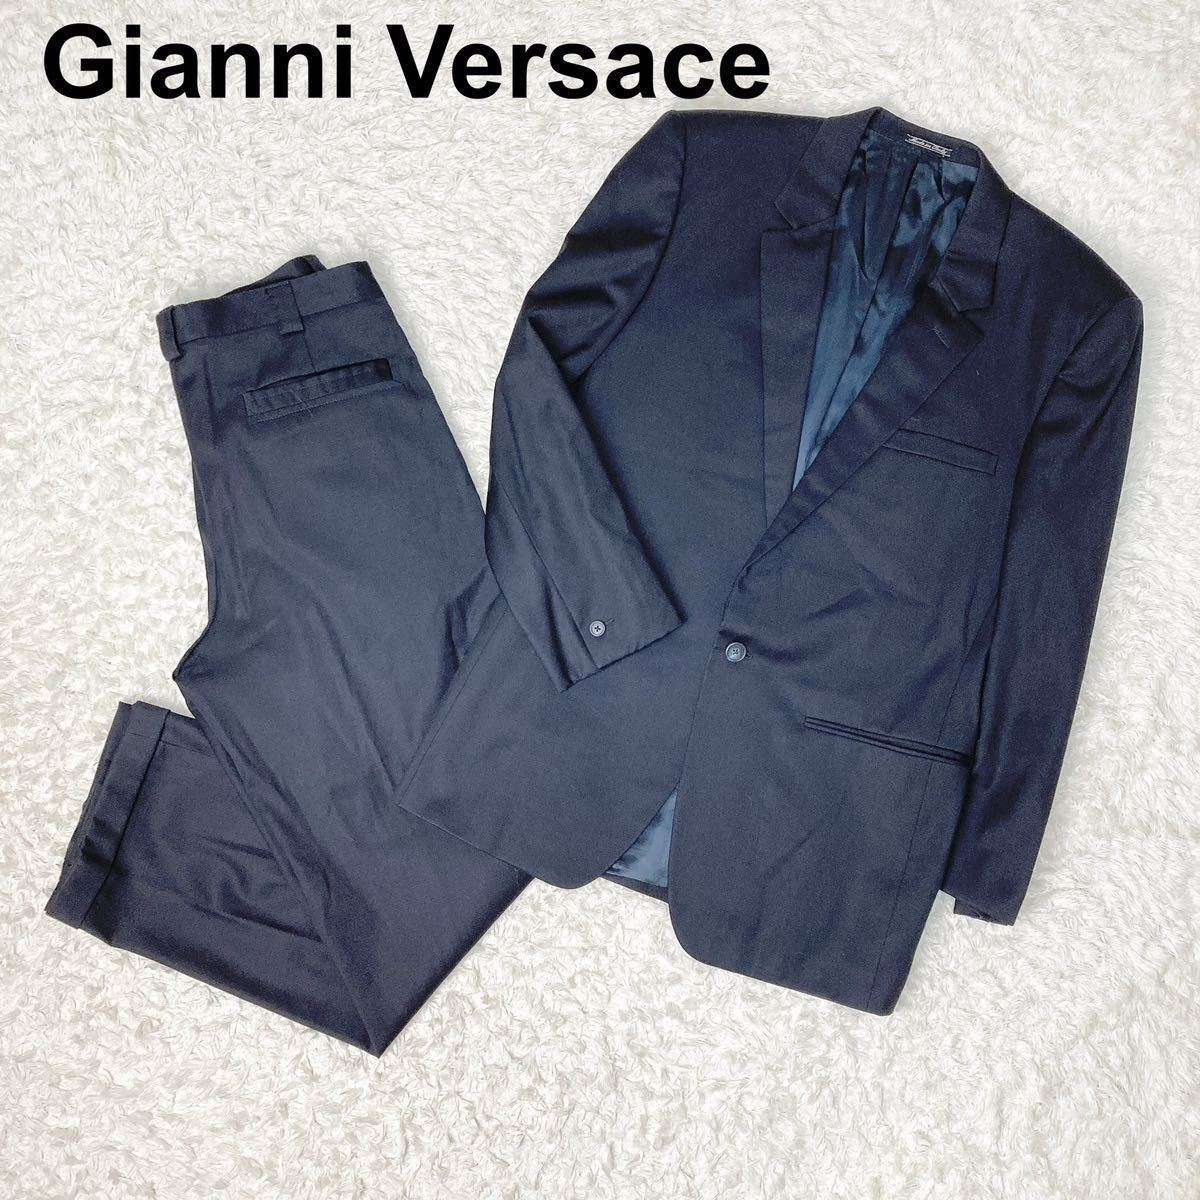 Gianni Versace ジャンニヴェルサーチ ビジネススーツ ネイビー 上下 B102331-120